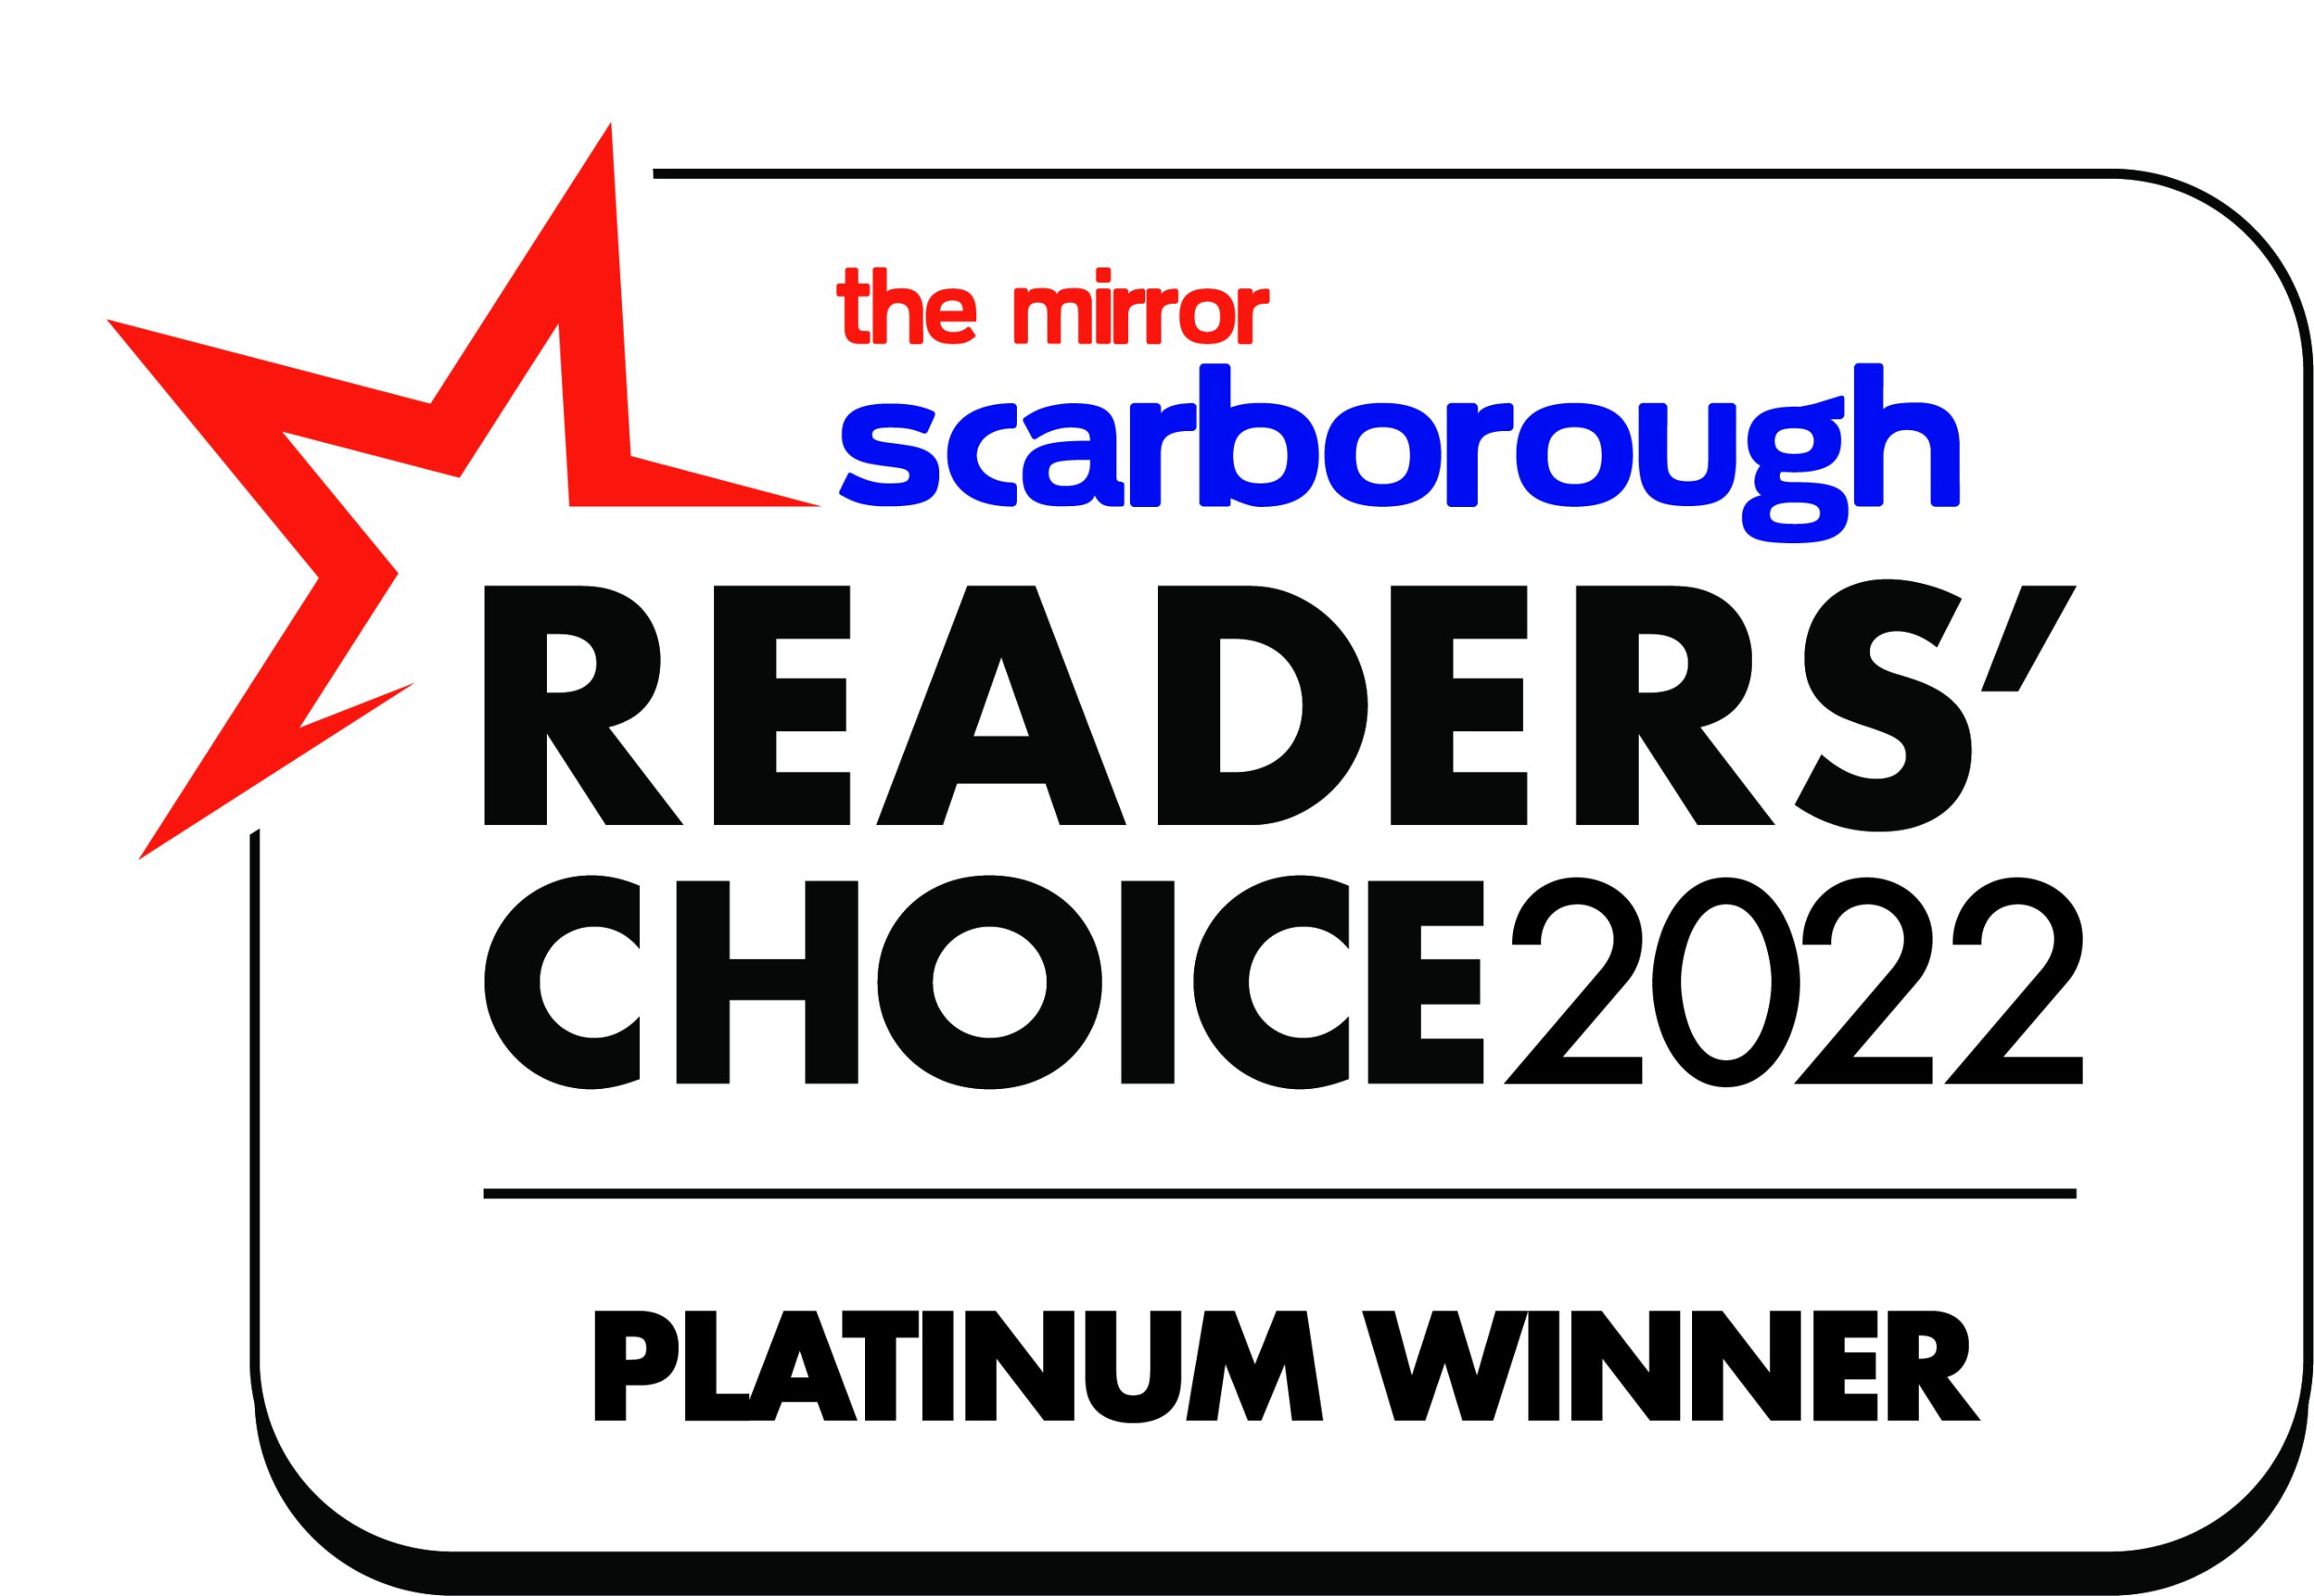 Readers Choice 2022 Platinum Winner Award - The Mirror Scarborough